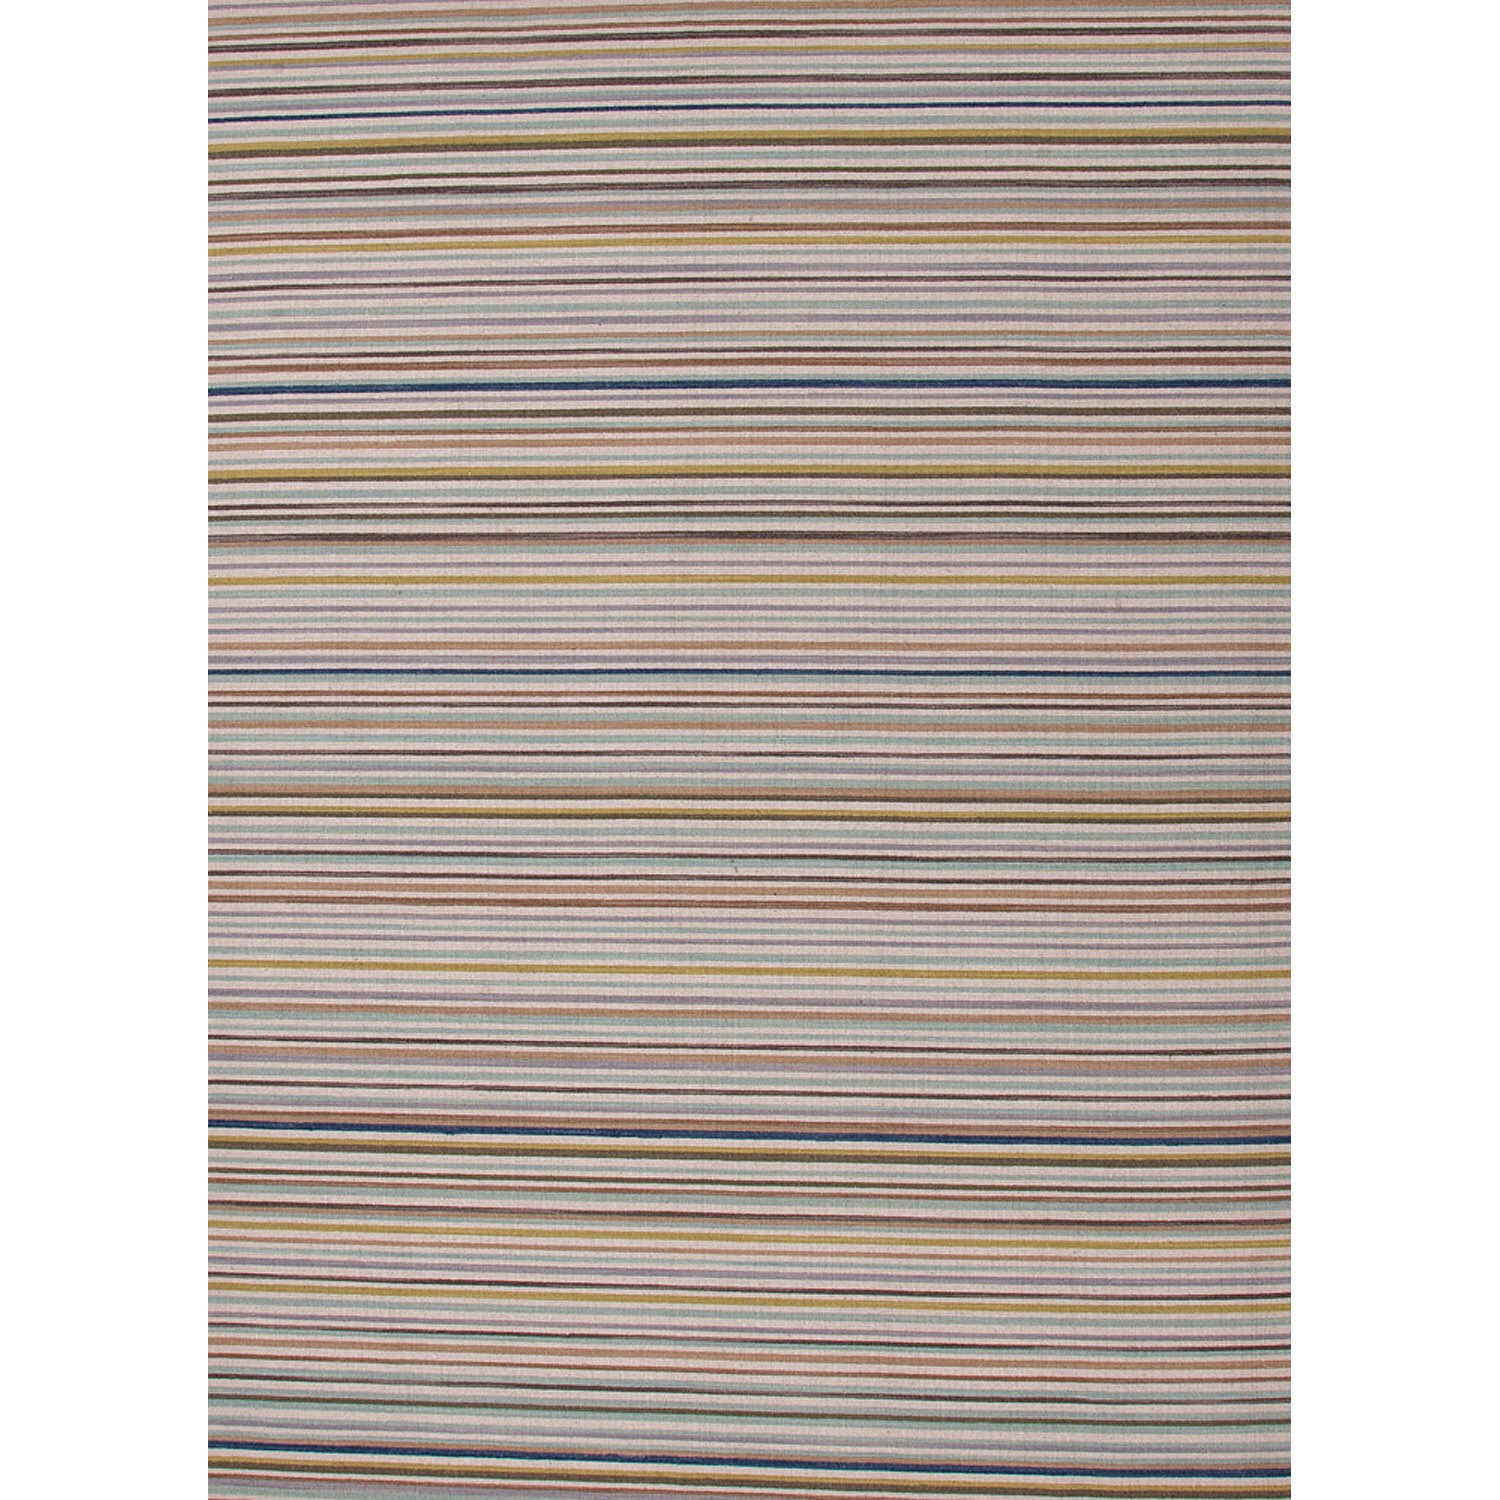 Handmade Flat weave Stripe Pattern Multicolor 100 percent Wool Area Rug (5 X 8)